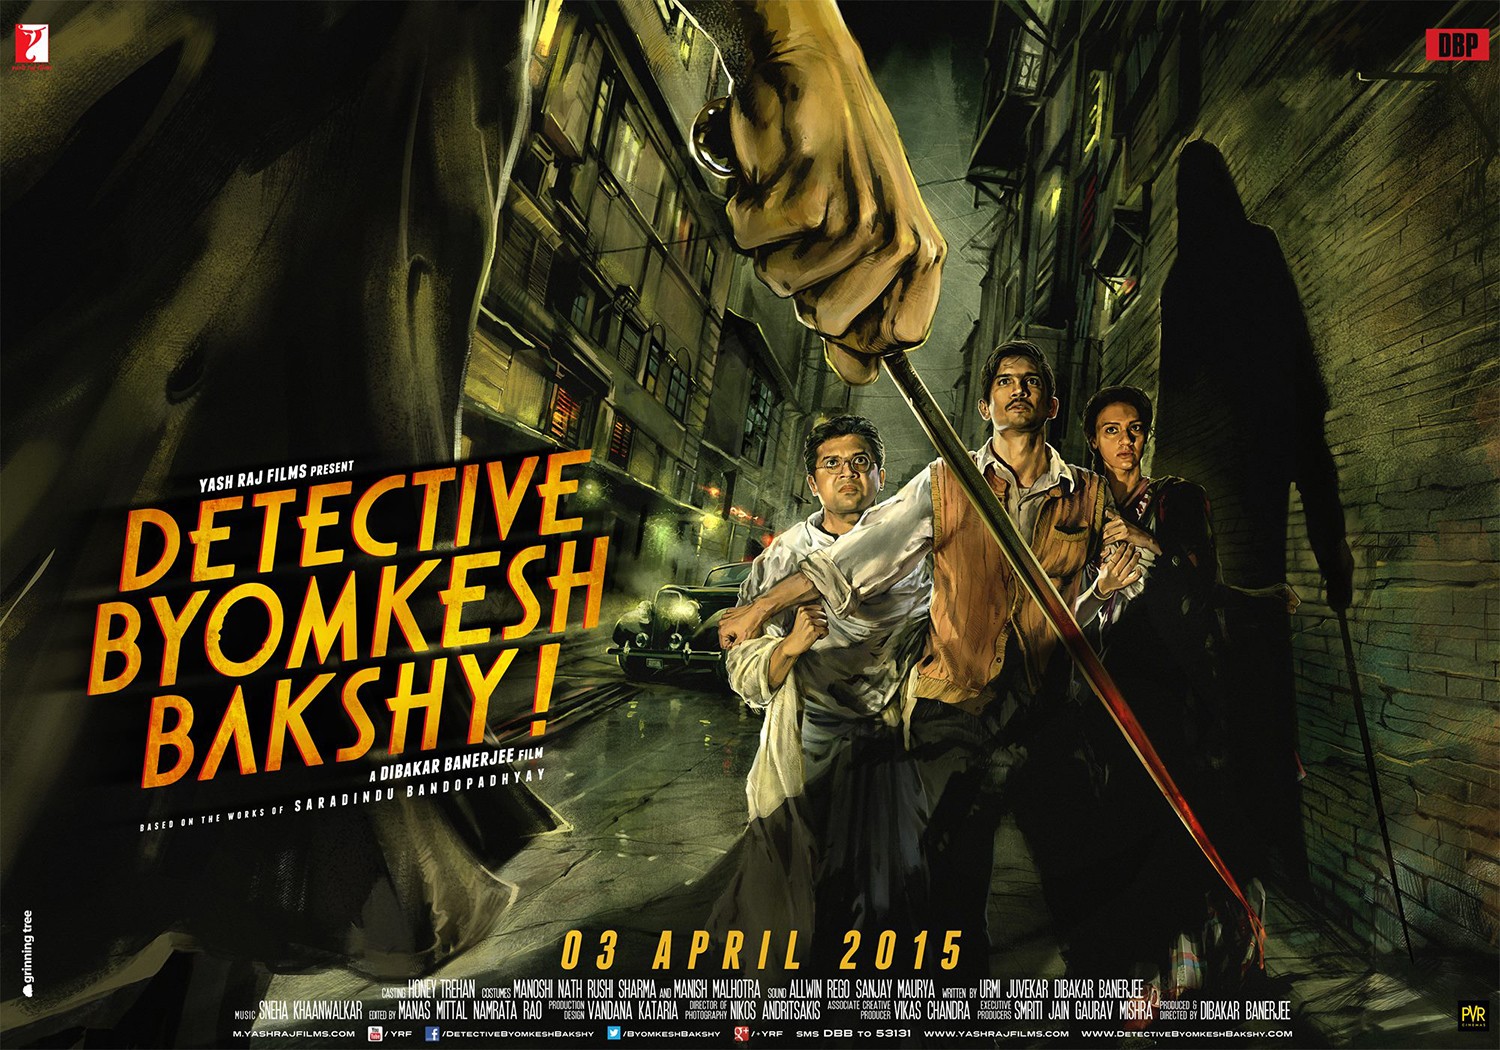 Detective Byomkesh Bakshy! [HOT] Full Movie Hd 720p